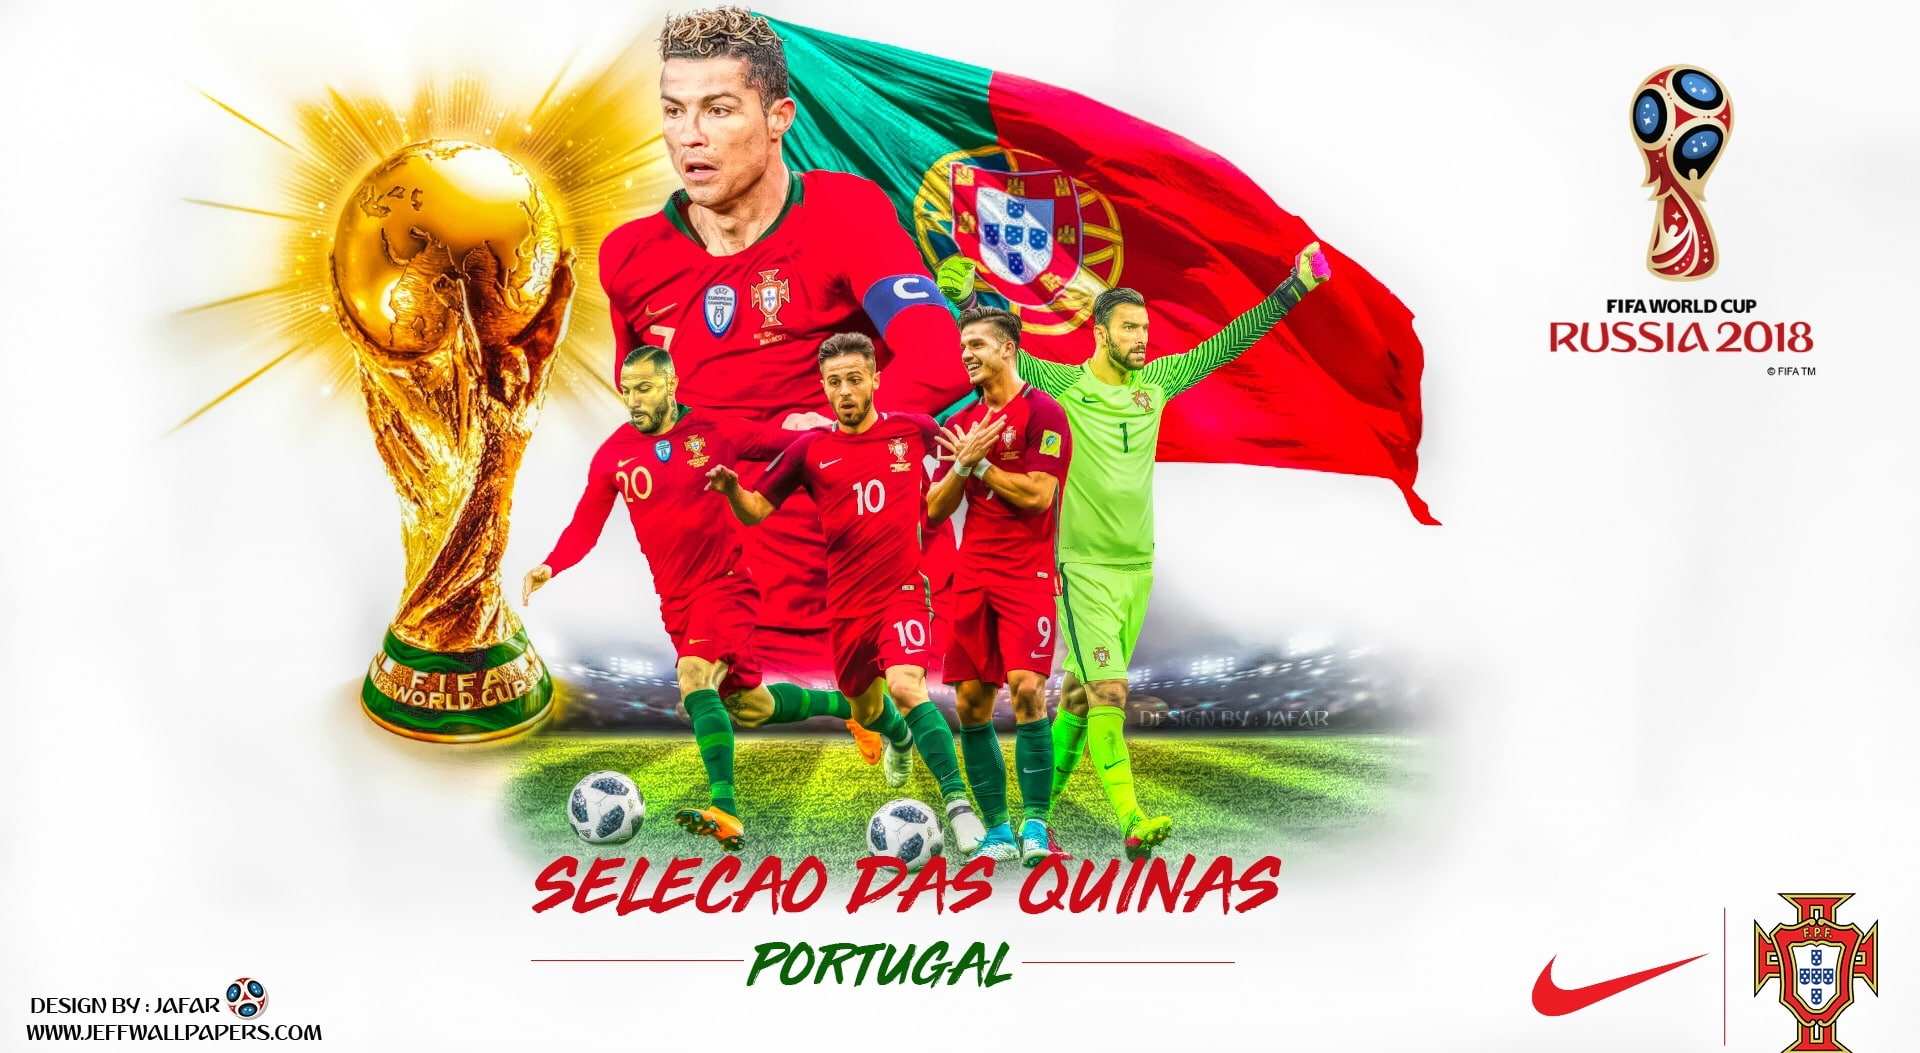 PORTUGAL WORLD CUP 2018, Sports, Football, cristiano ronaldo